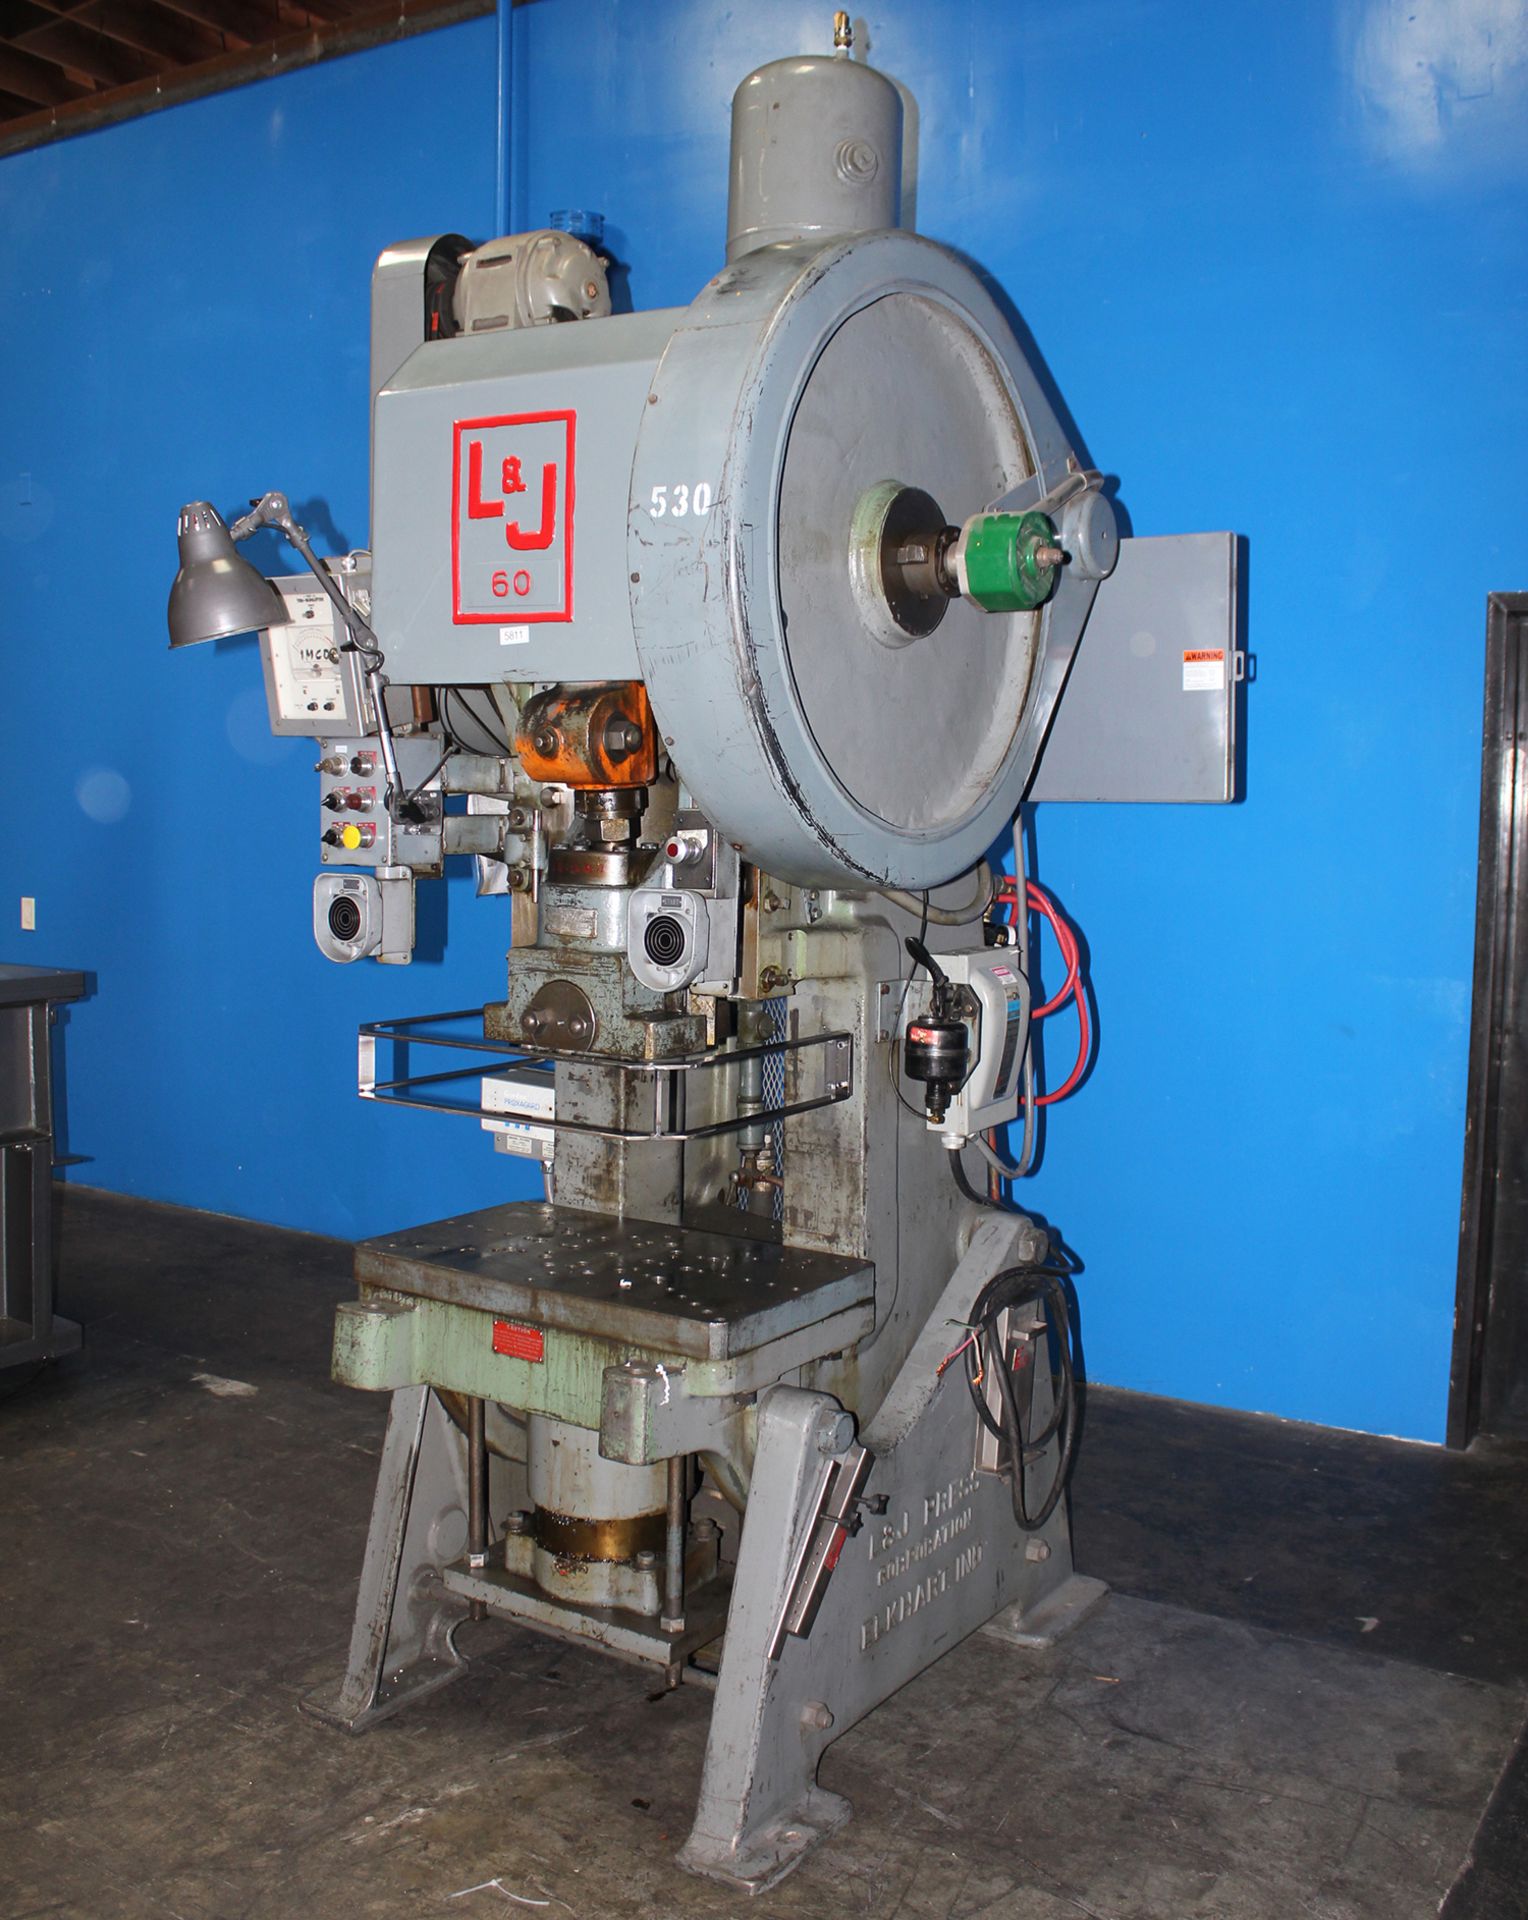 60-Ton L & J OBI Punch Press 30" x 18" Metal Forming Machine - Located In: Huntington Park, CA - Image 2 of 8